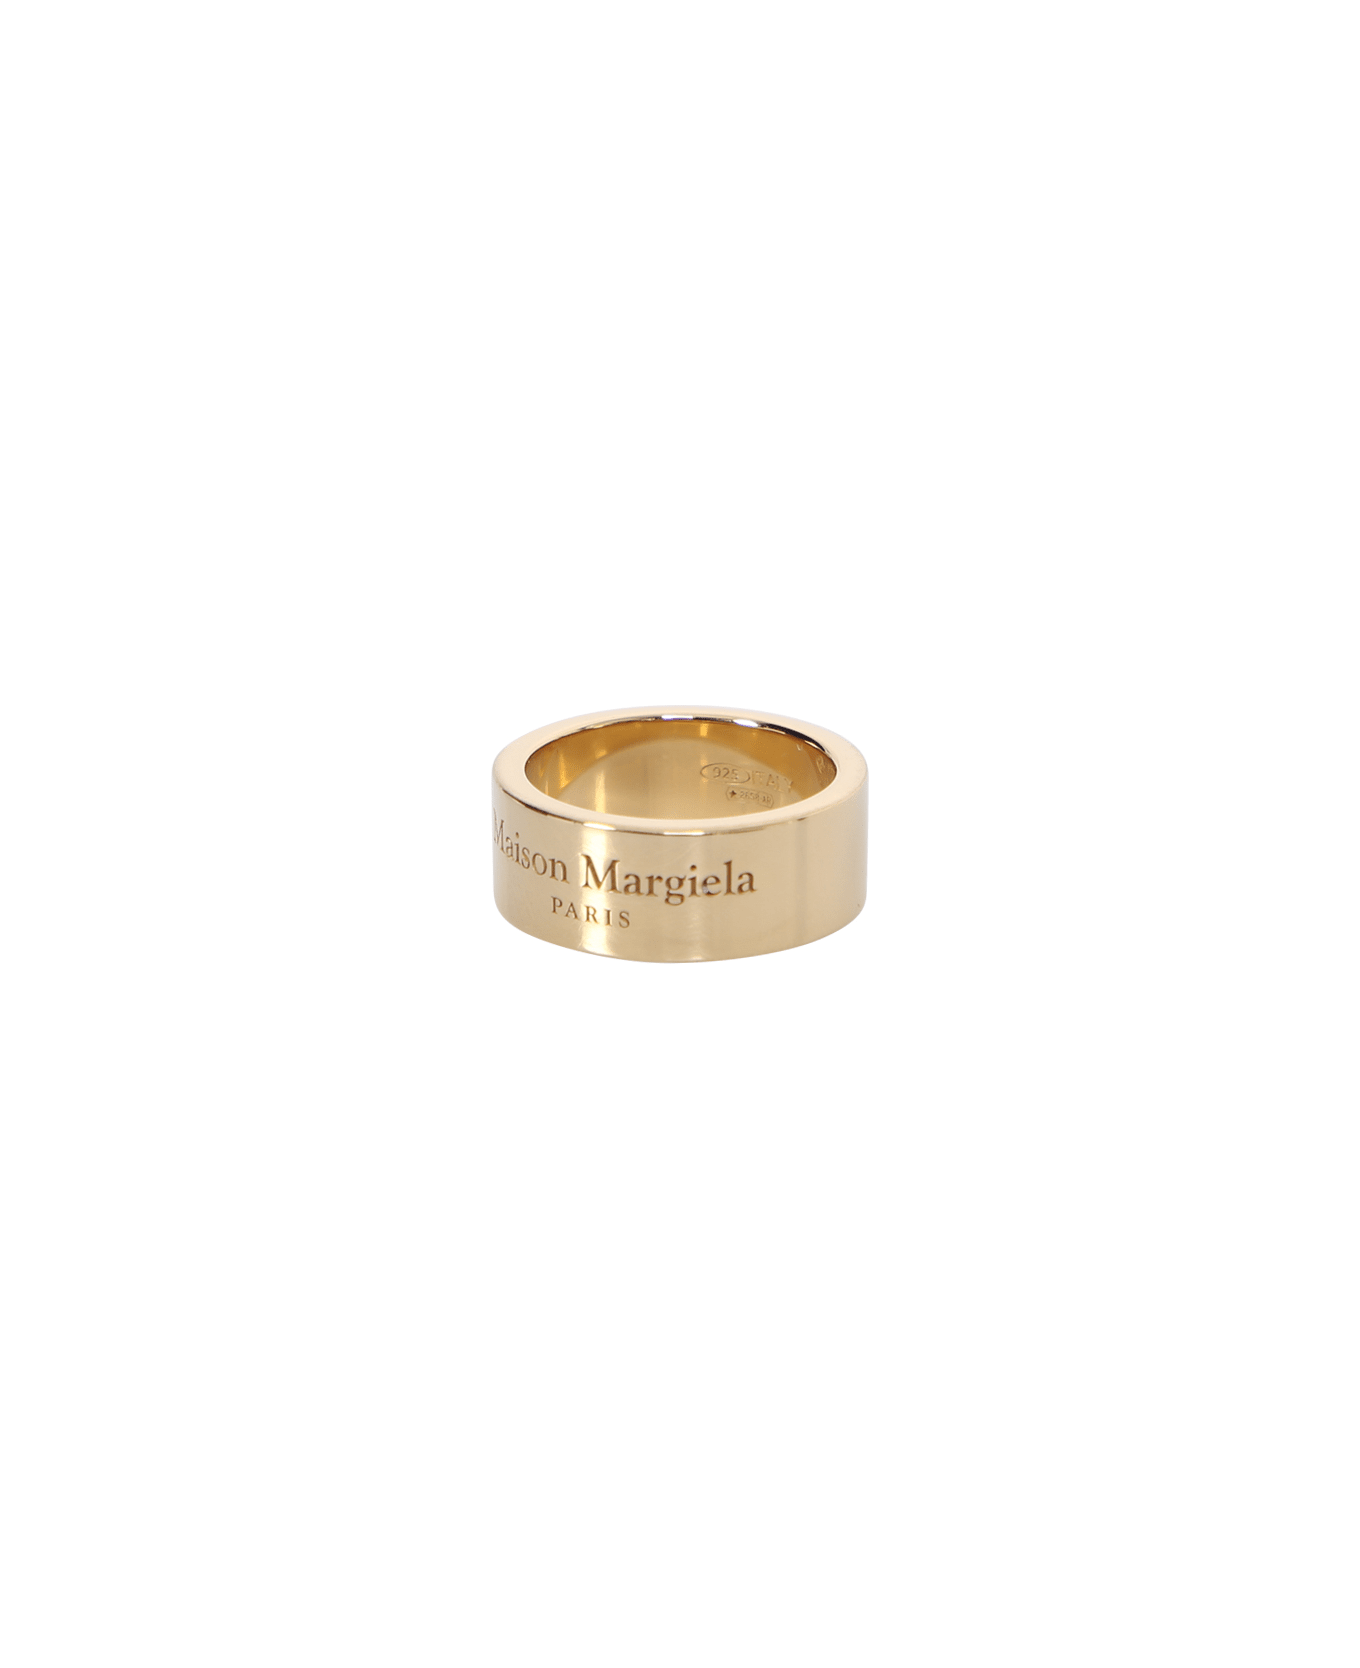 Maison Margiela Engraved Logo Ring Gold - Metallic